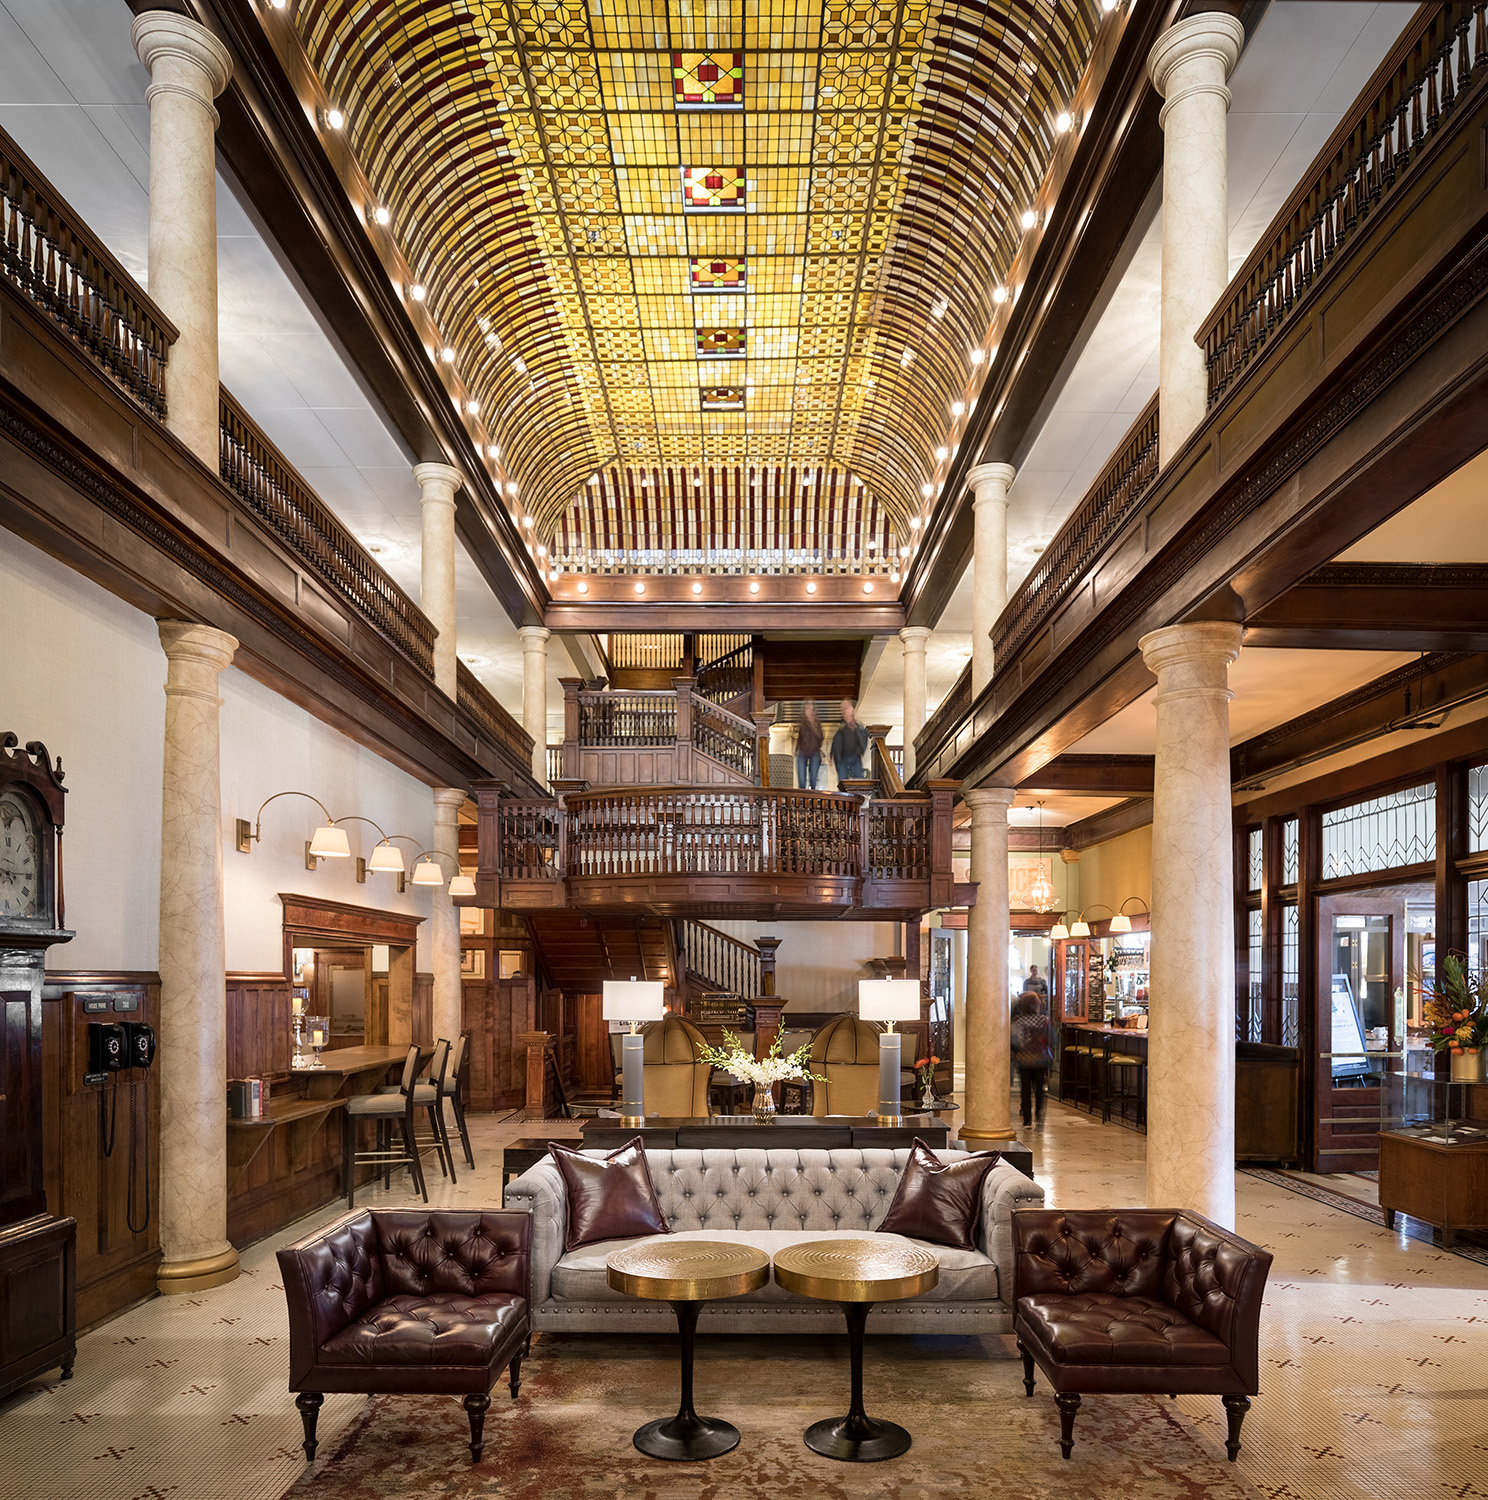 Hotel Boulderado, renovation, historic, interior design, hospitality